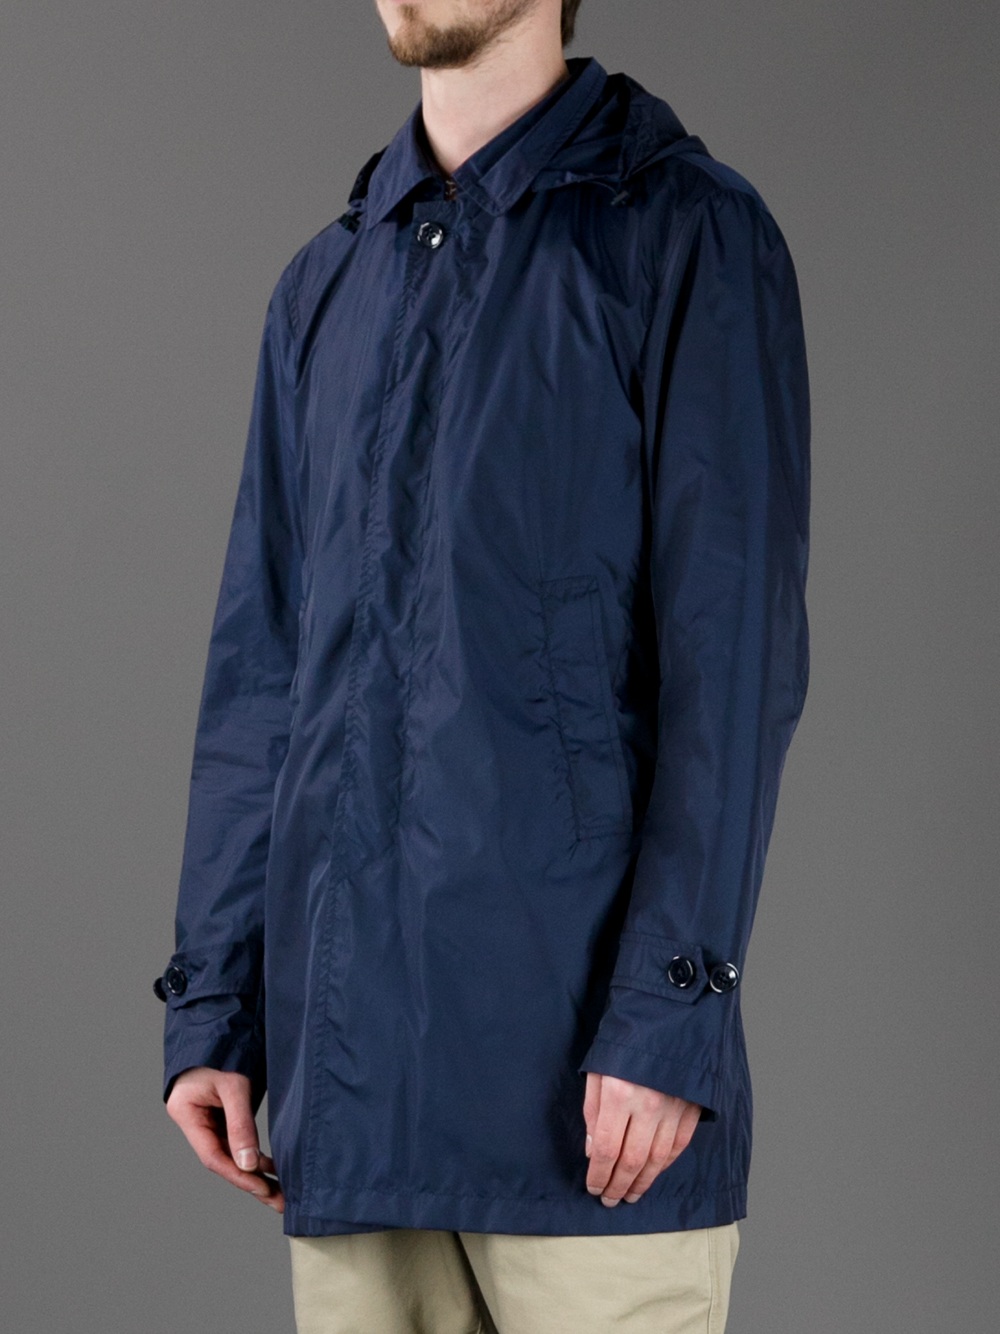 Herno Hooded Raincoat in Blue for Men - Lyst